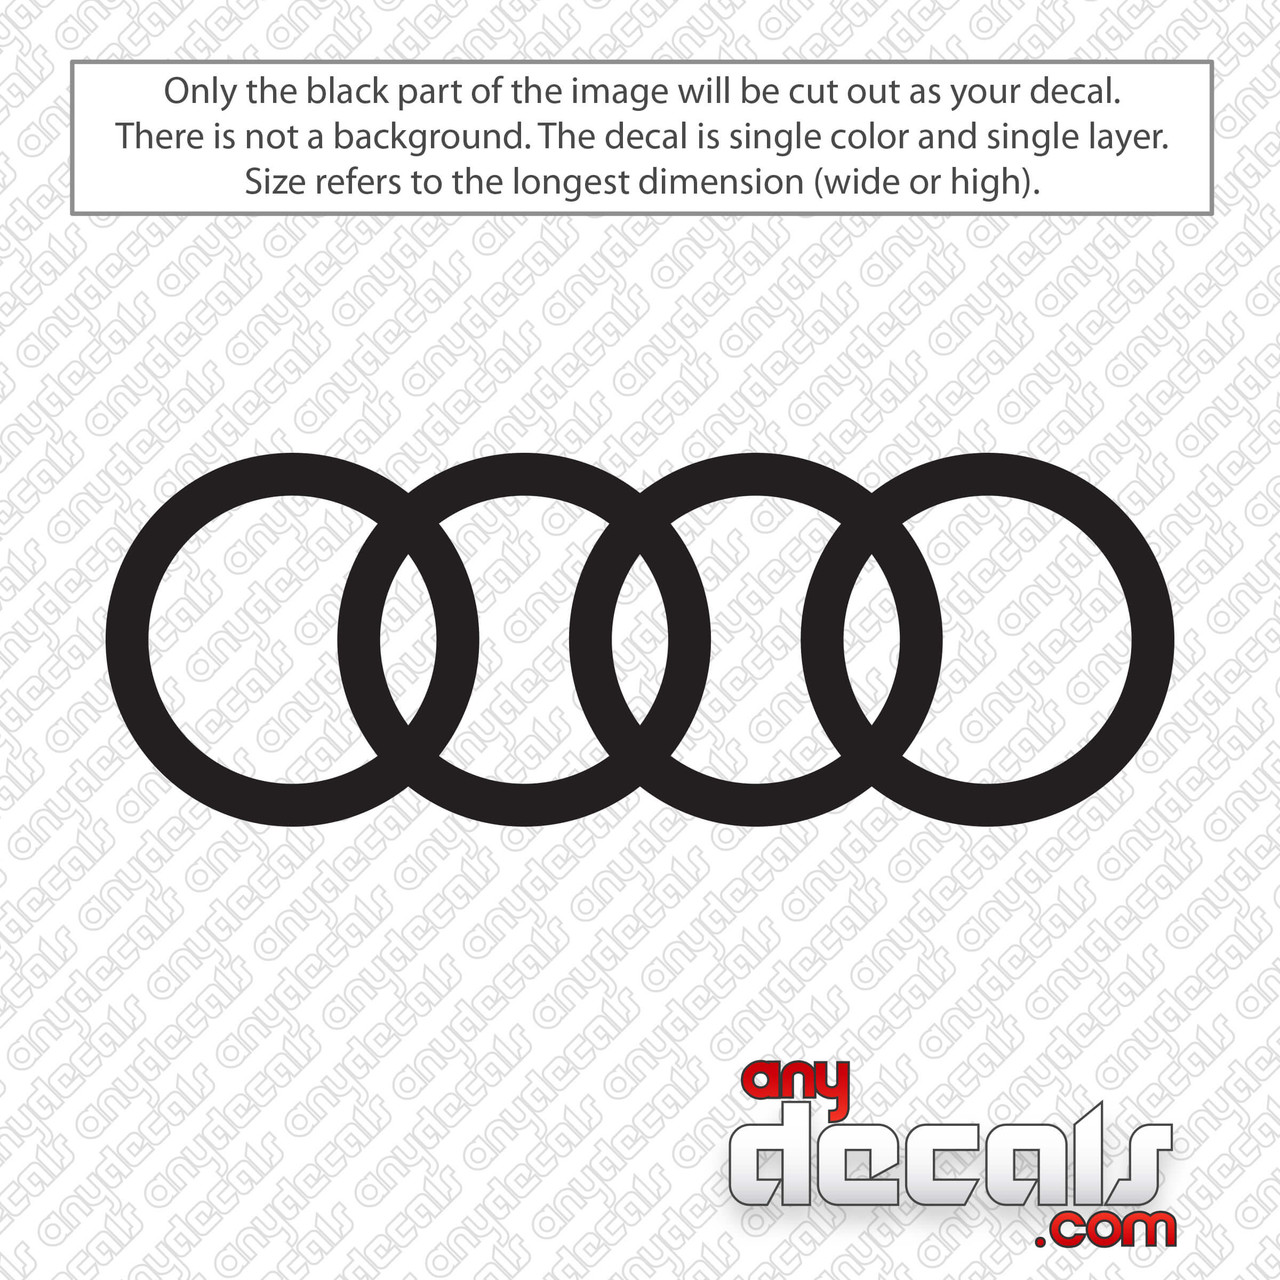 Audi Emblem Decal Sticker